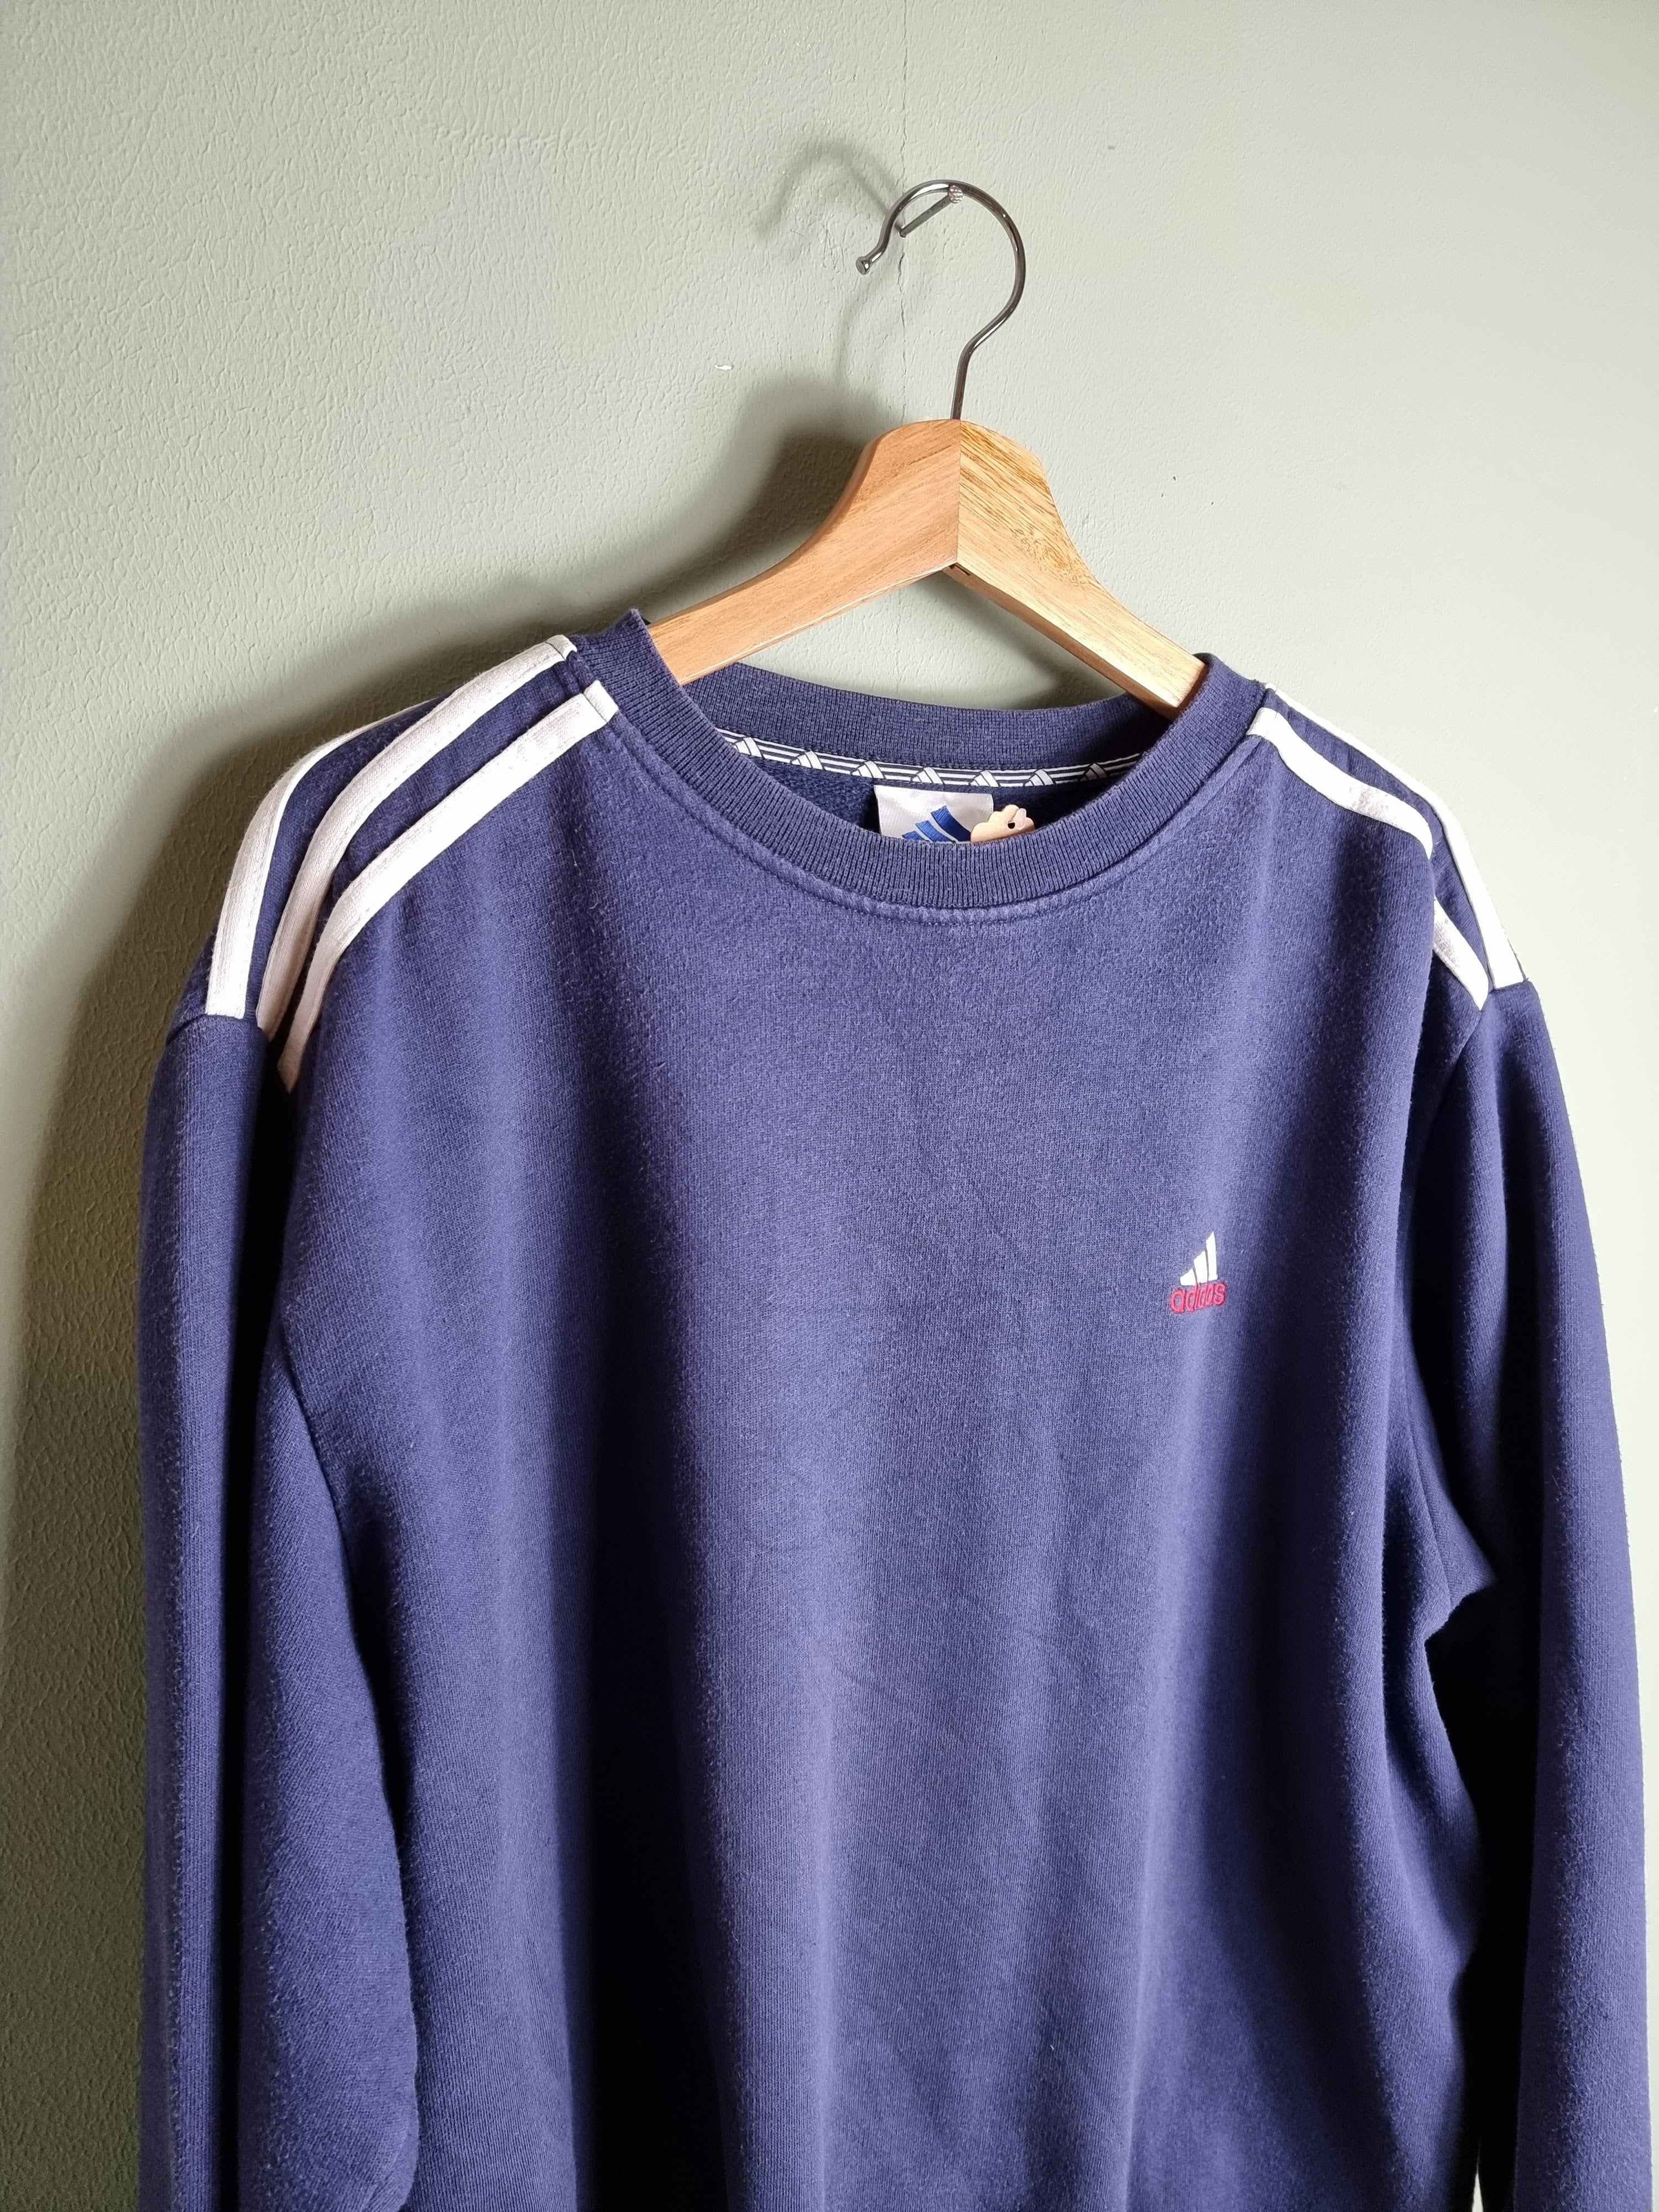 Classic adidas sweater - L